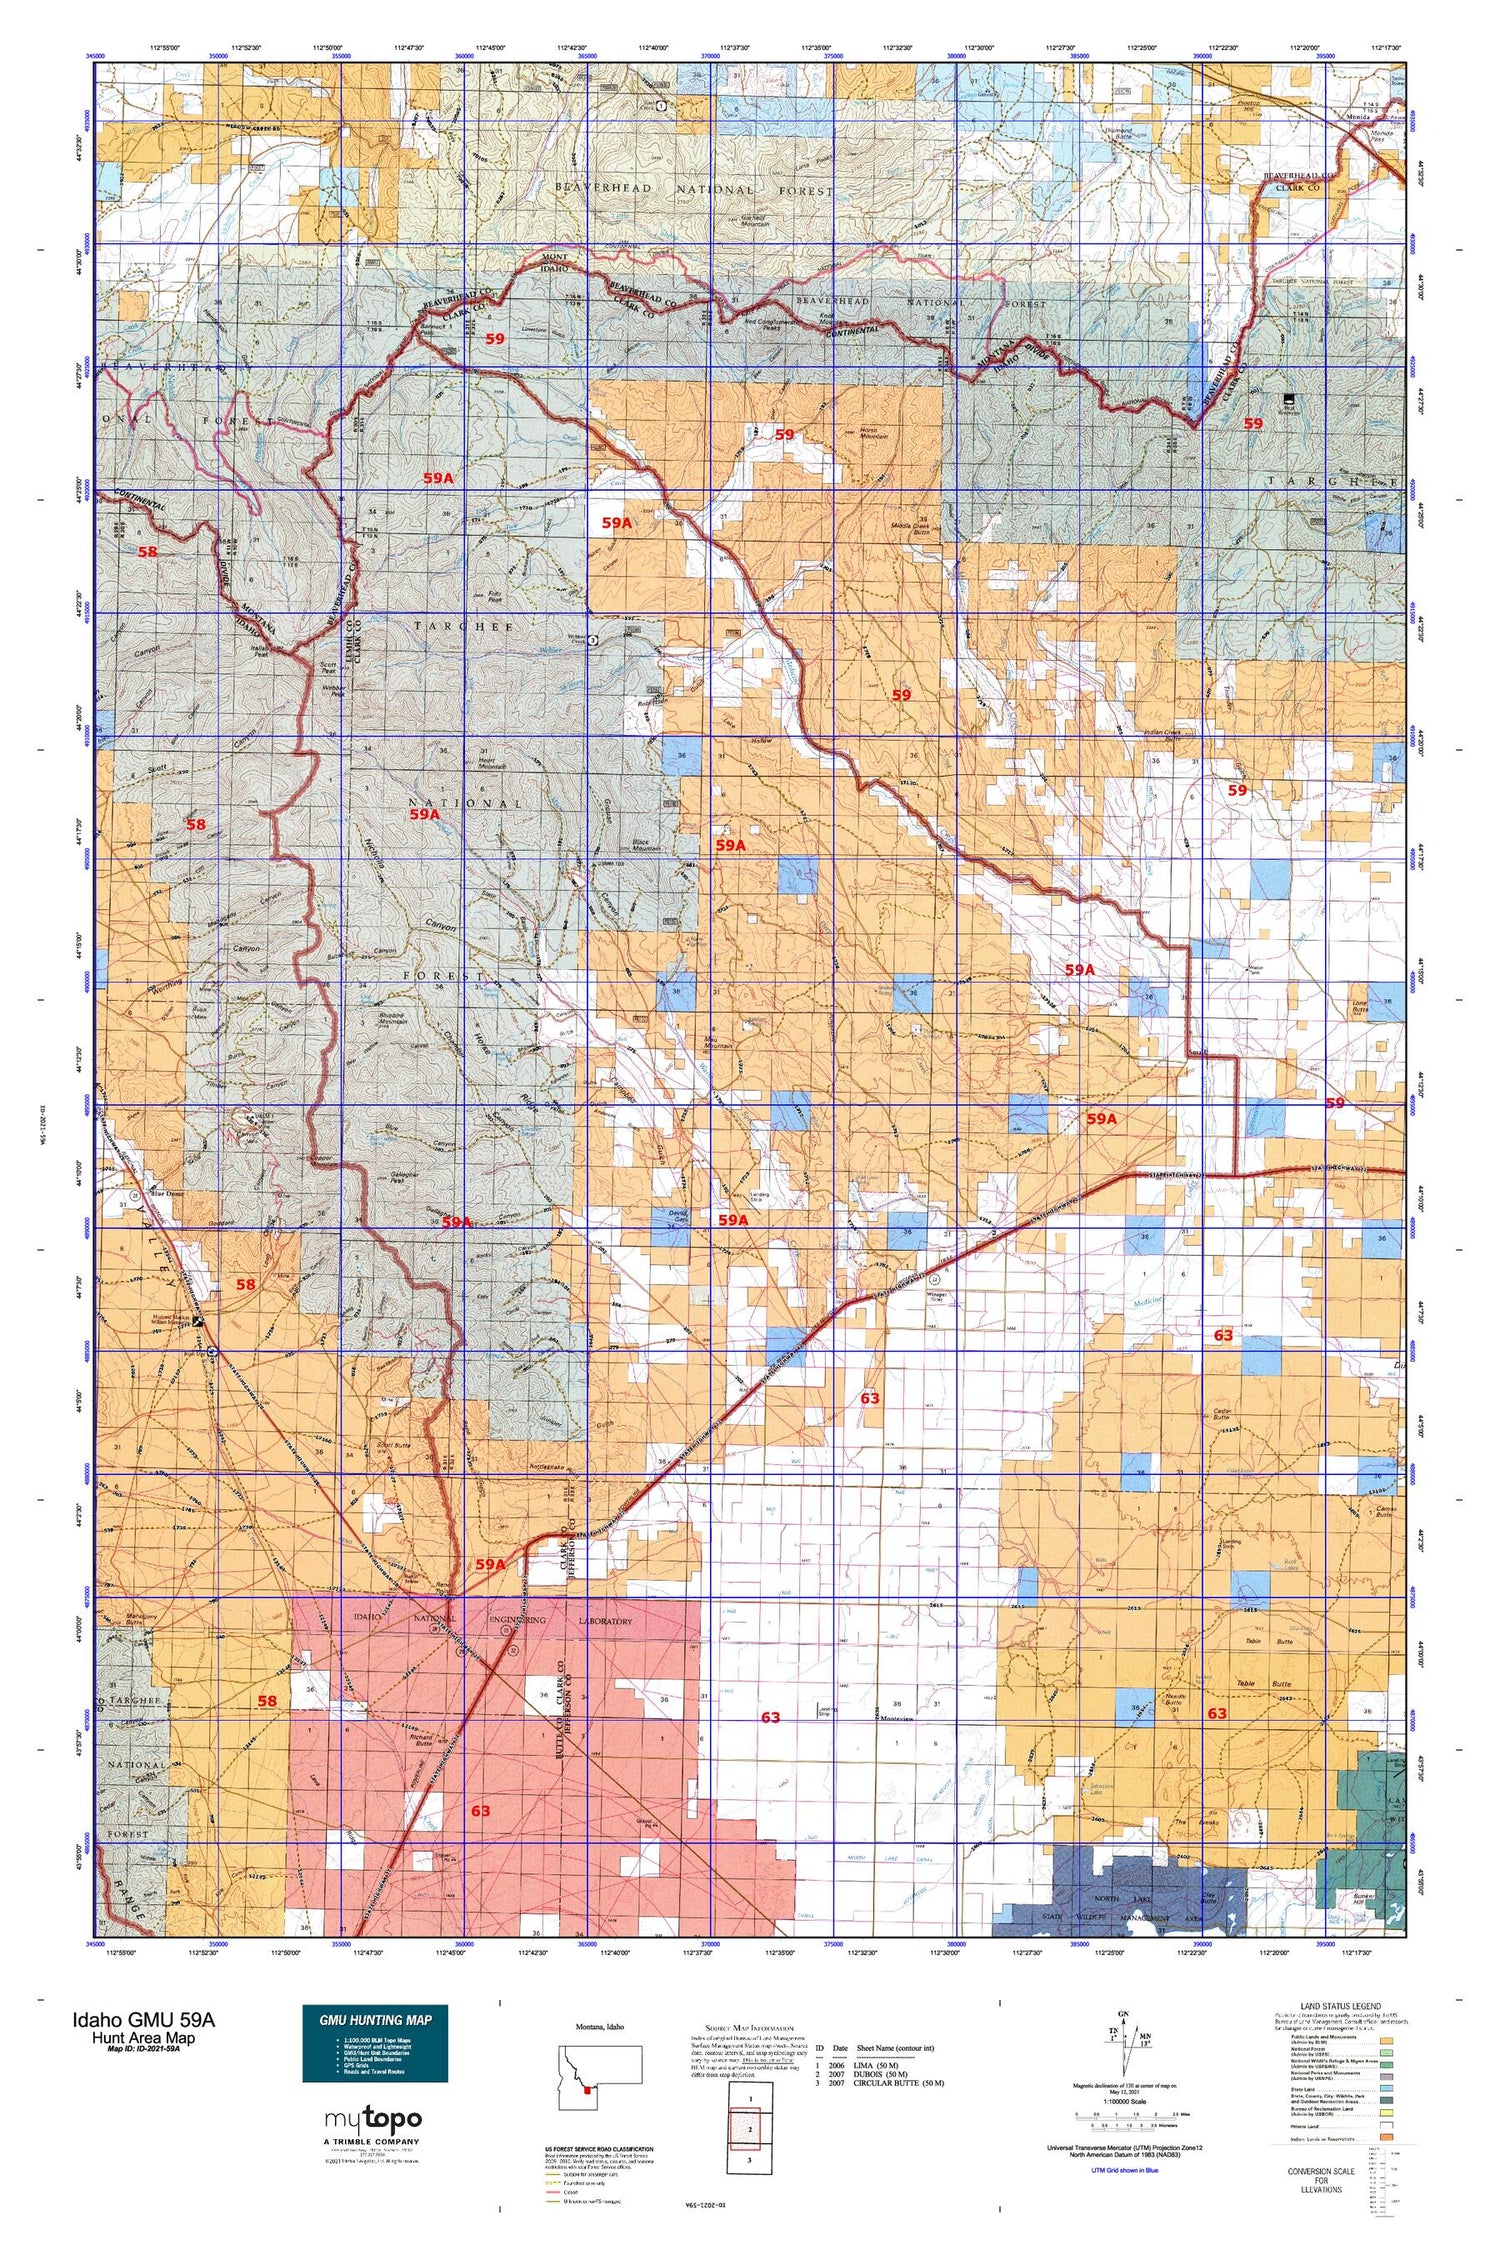 Idaho GMU 59A Map Image